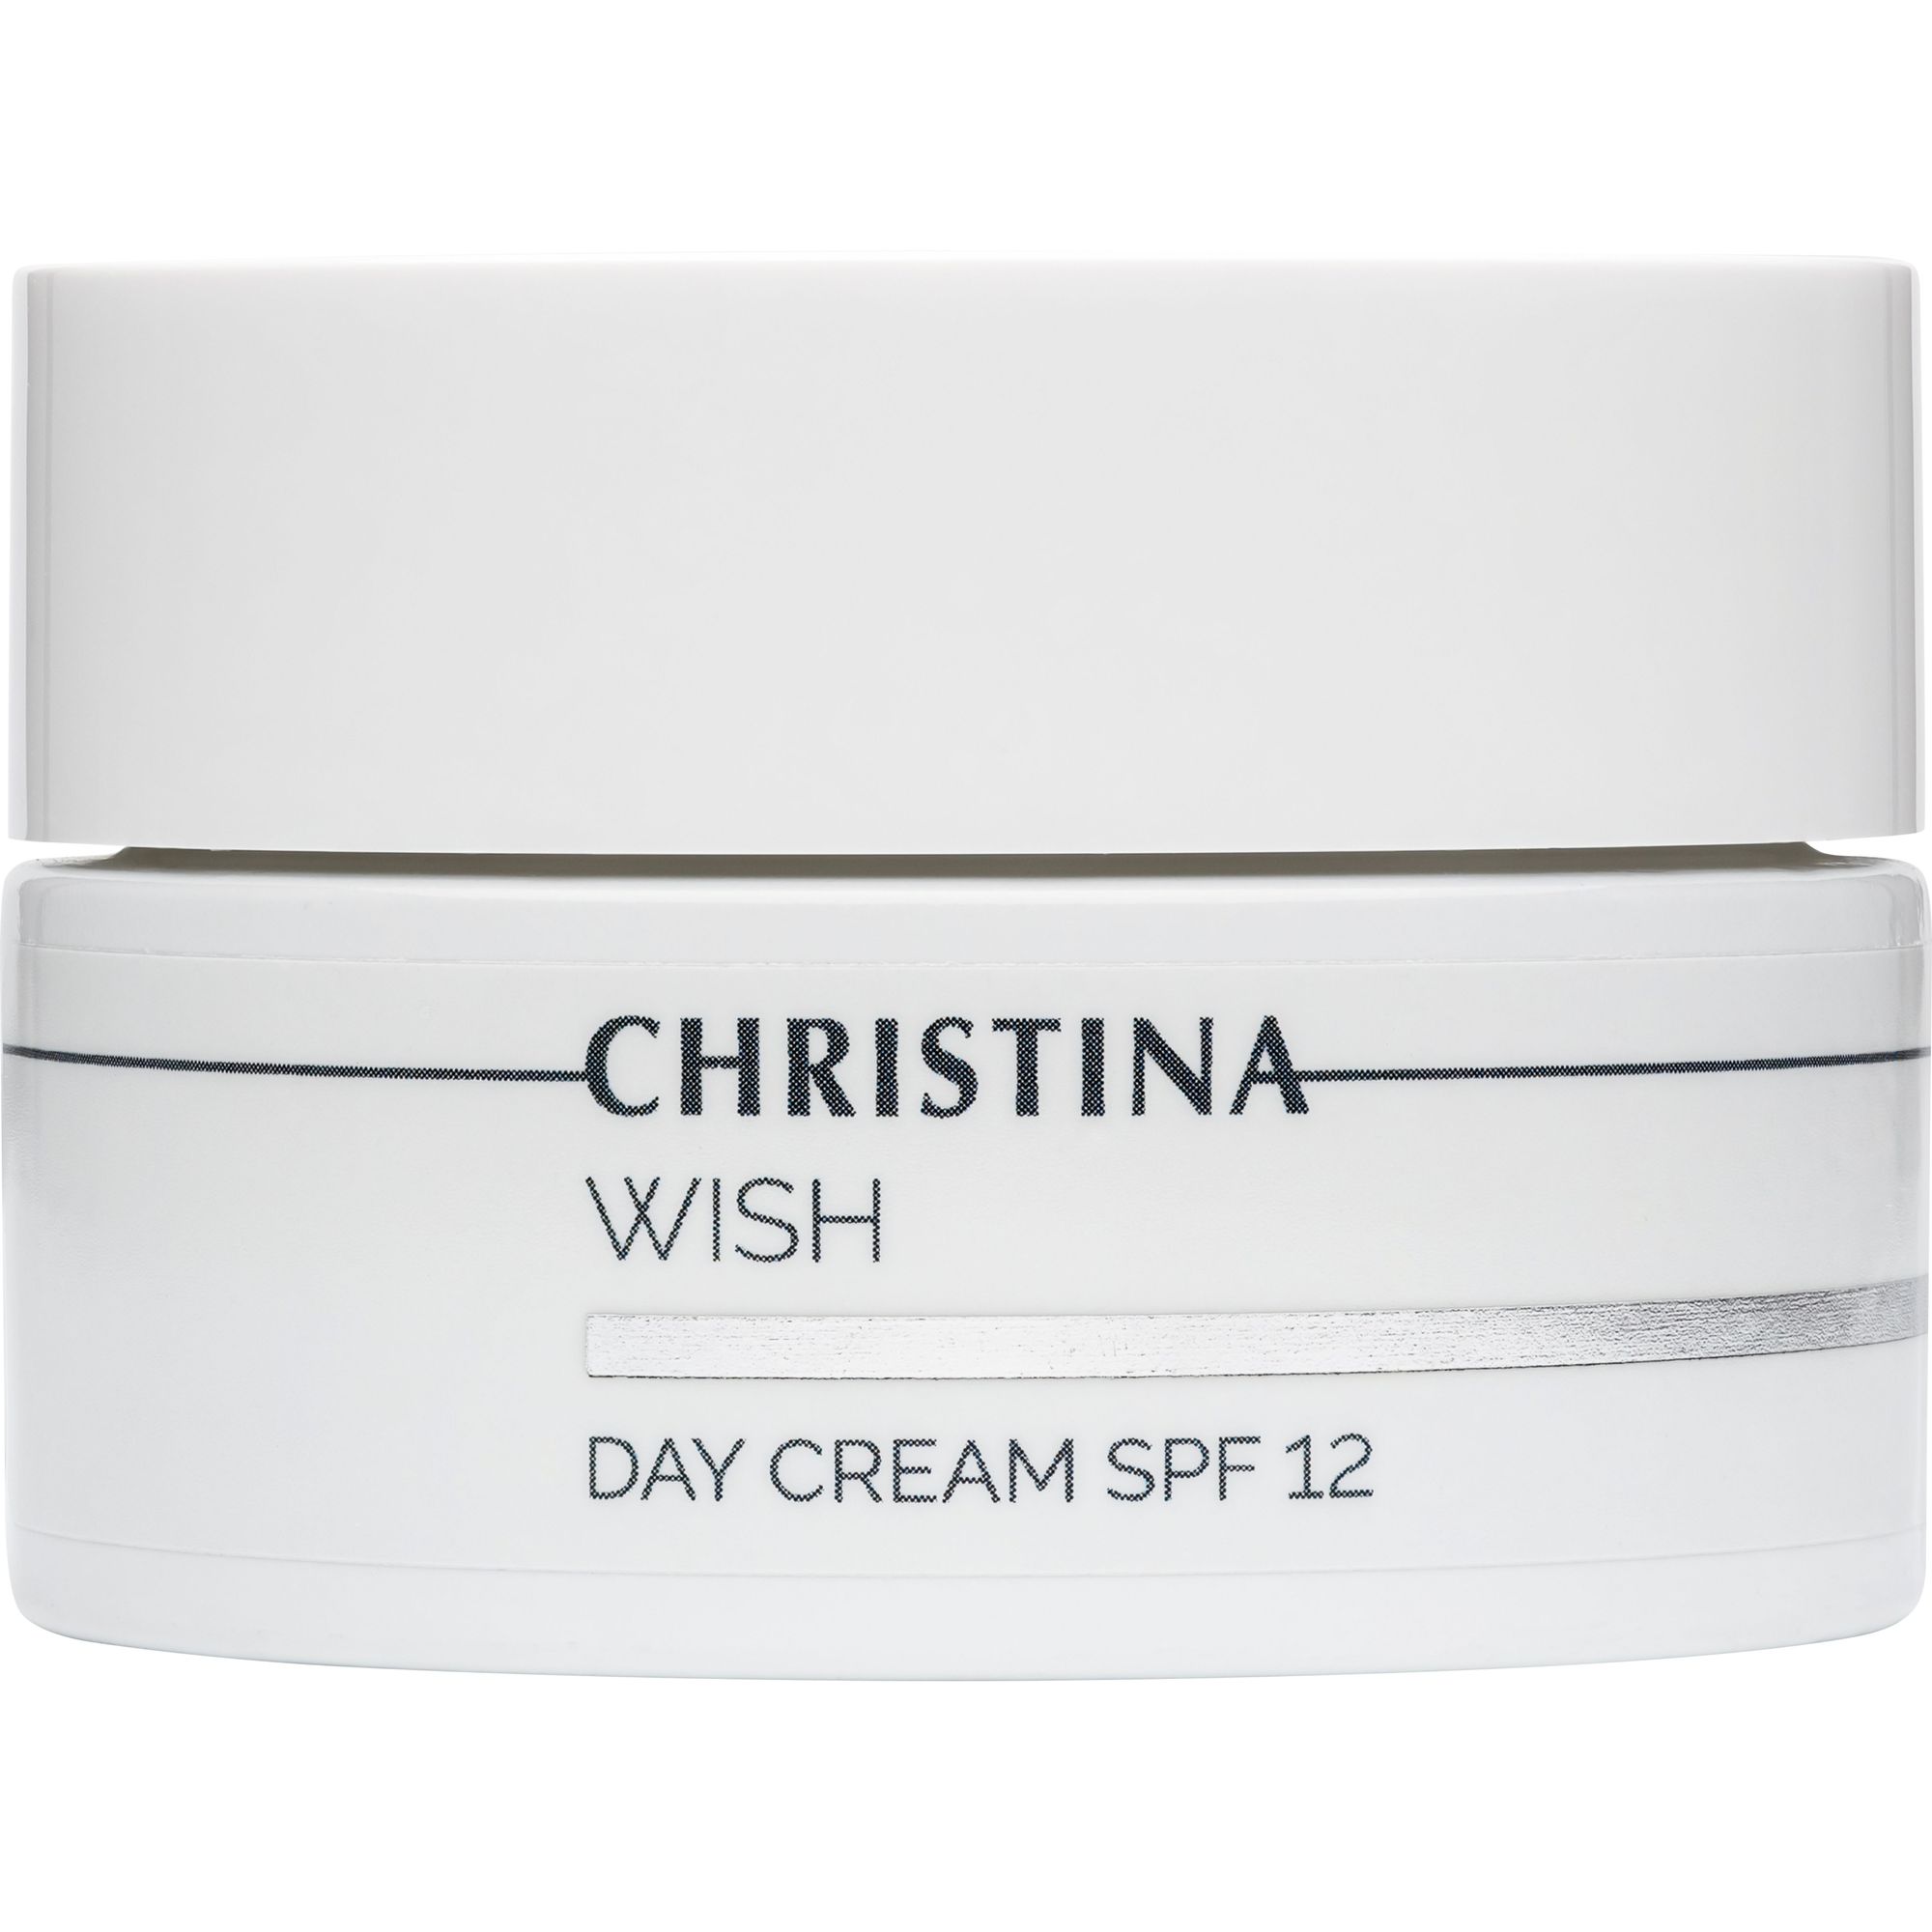 Дневной крем Christina Wish Day Cream SPF 12 50 мл - фото 1